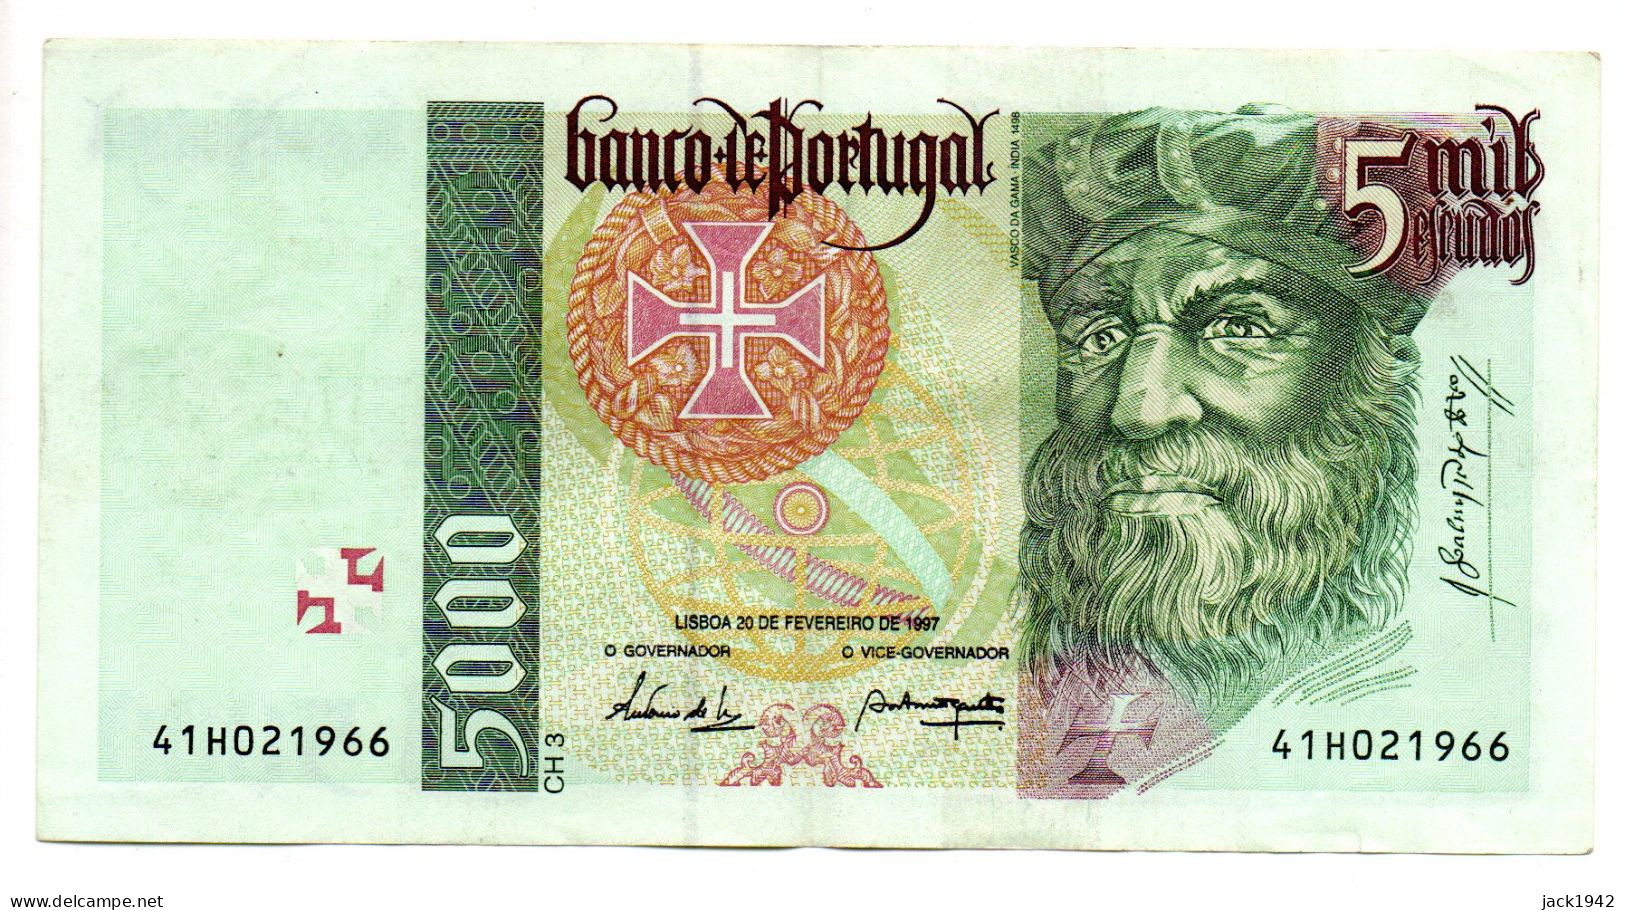 5000 Escudos Note - Billet De 5000 Escudos - Février 1997 - TB - Portugal